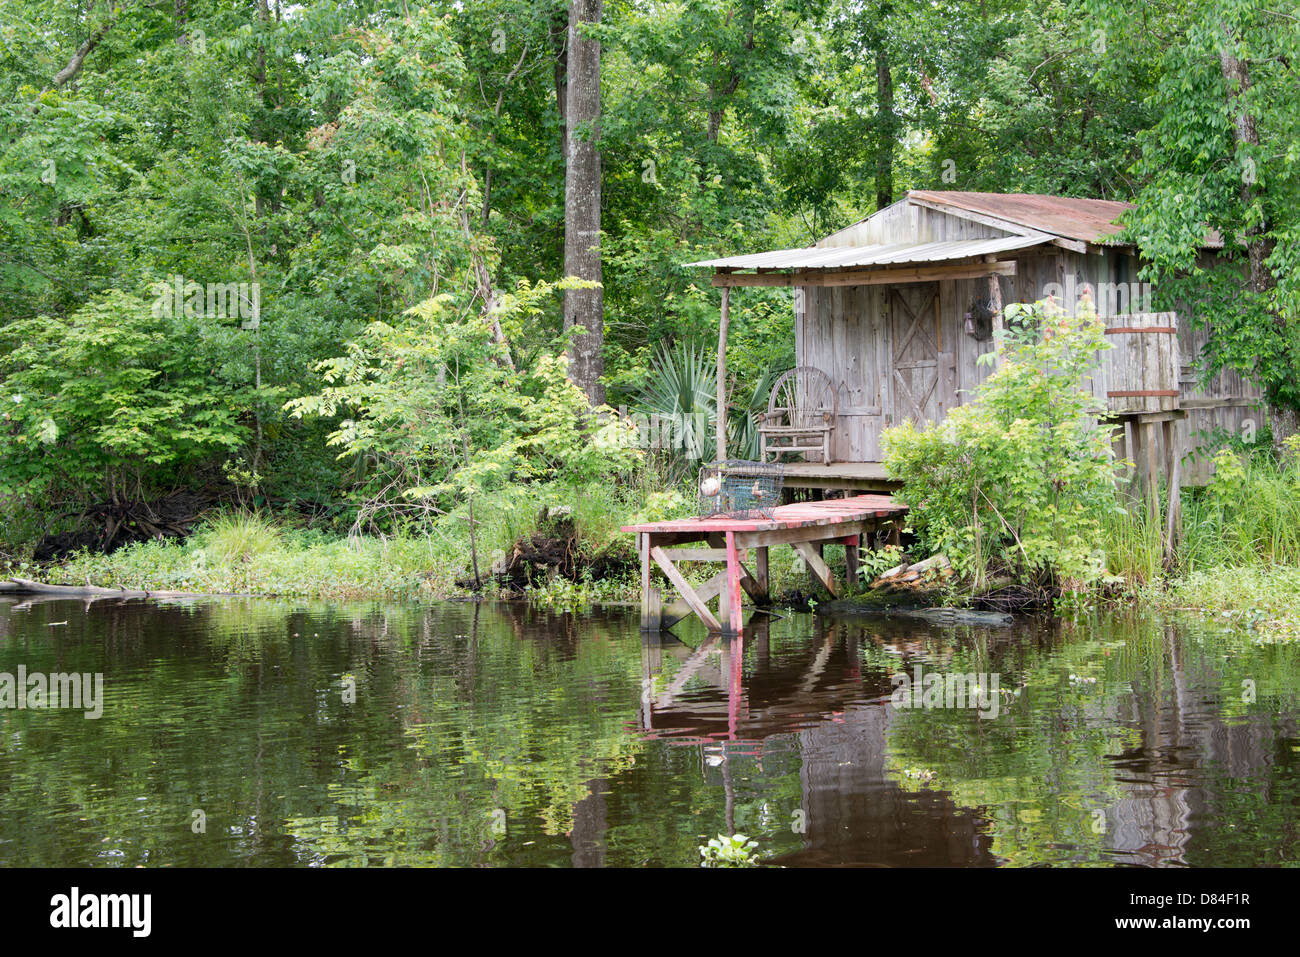 In Louisiana, New Orleans, Lafitte. Jean Lafitte National Historical Park - Barataria preservare. Tradizionale cabina bayou. Foto Stock